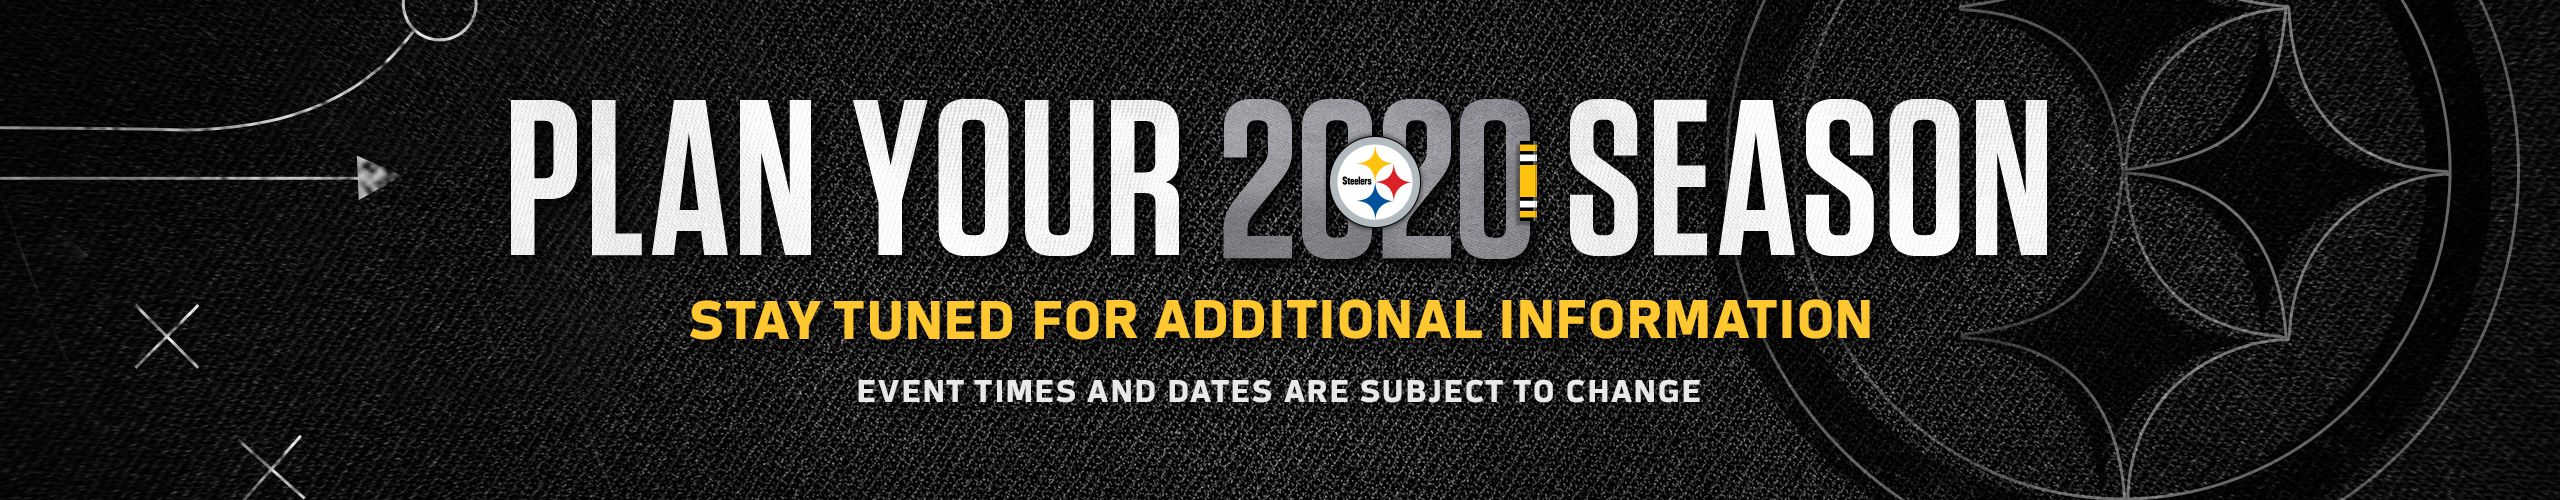 Steelers Events Calendar Pittsburgh Steelers